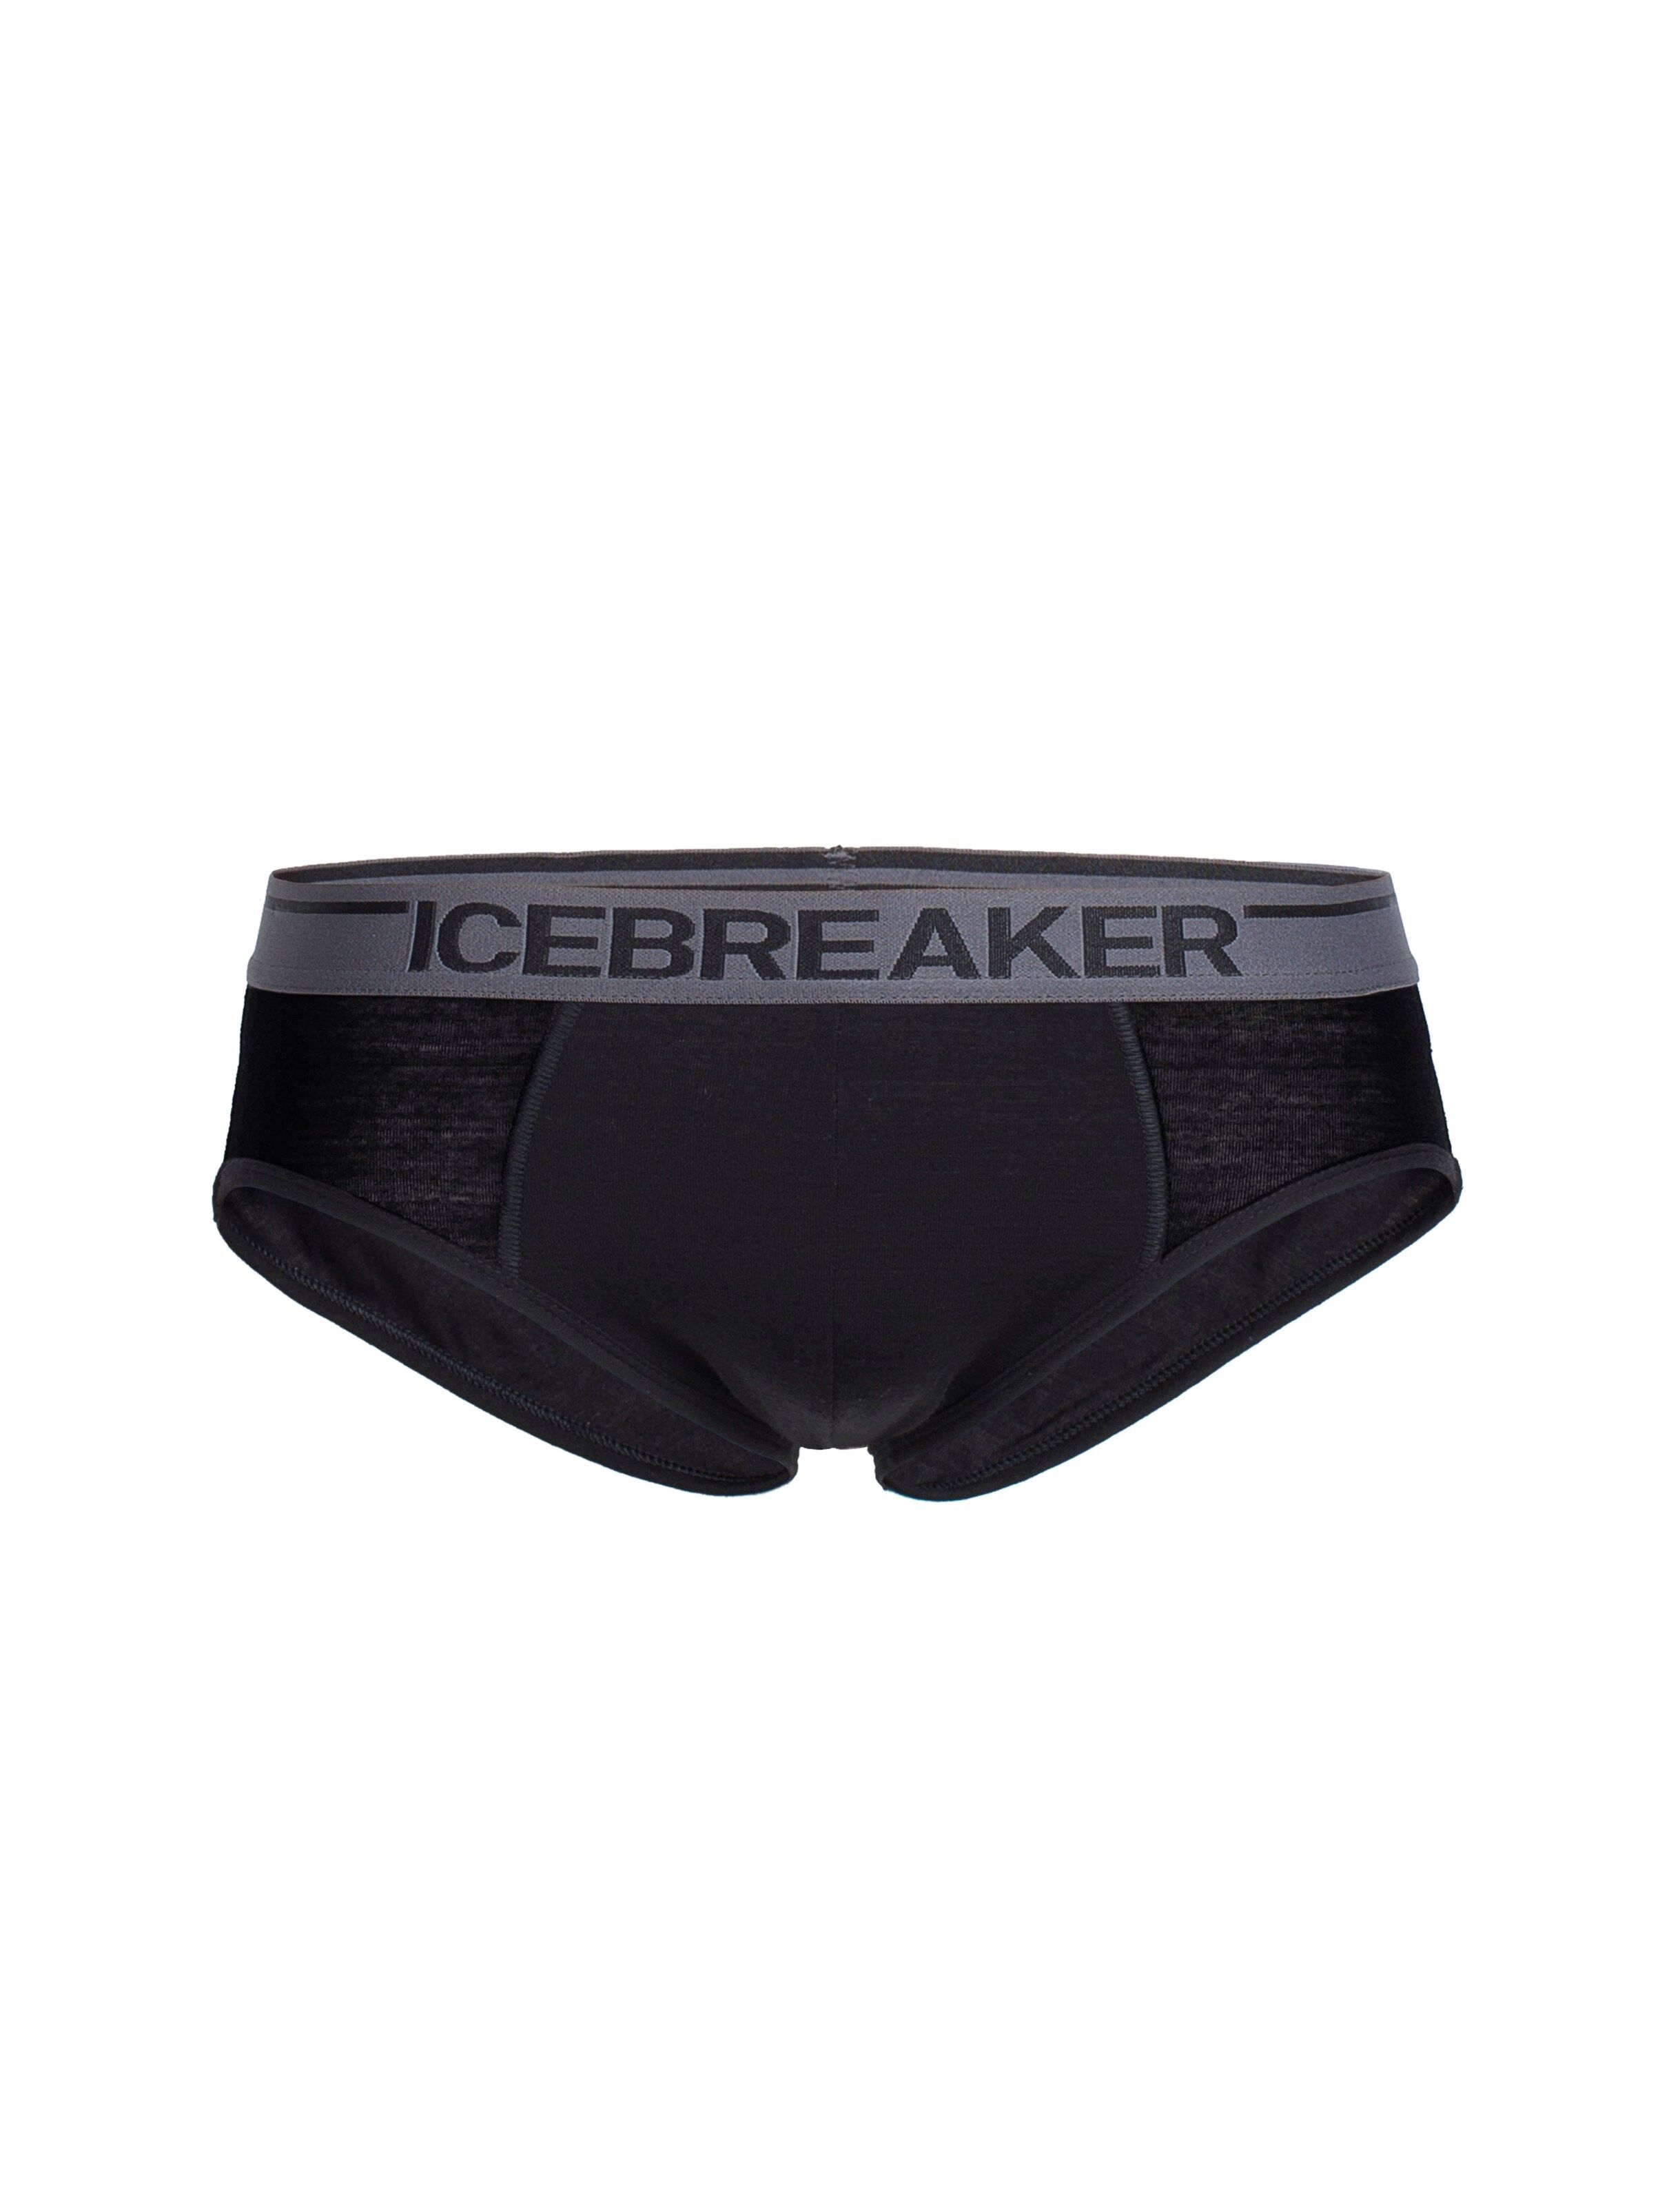 Icebreaker Anatomica Briefs, undertøy herre Black 103031001 S 2019